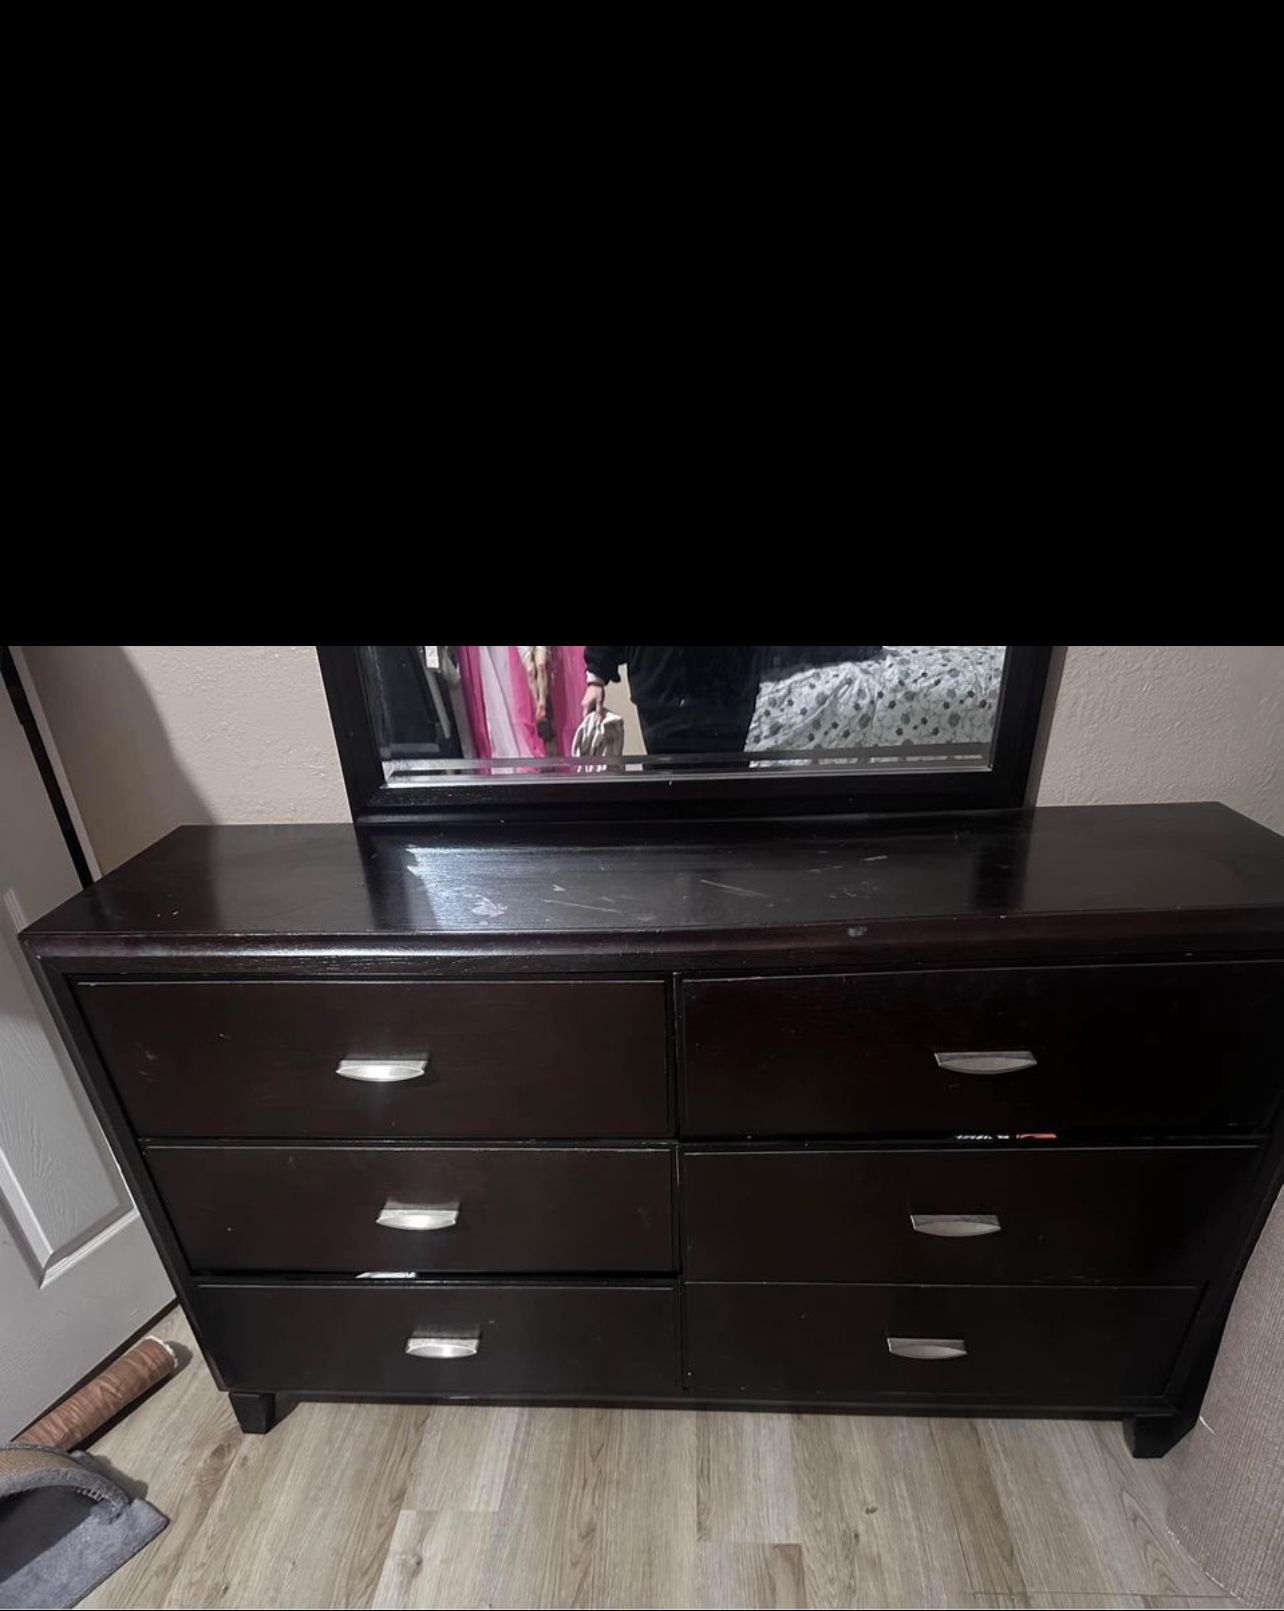 Furniture Queen Sz Bed W/dresser 